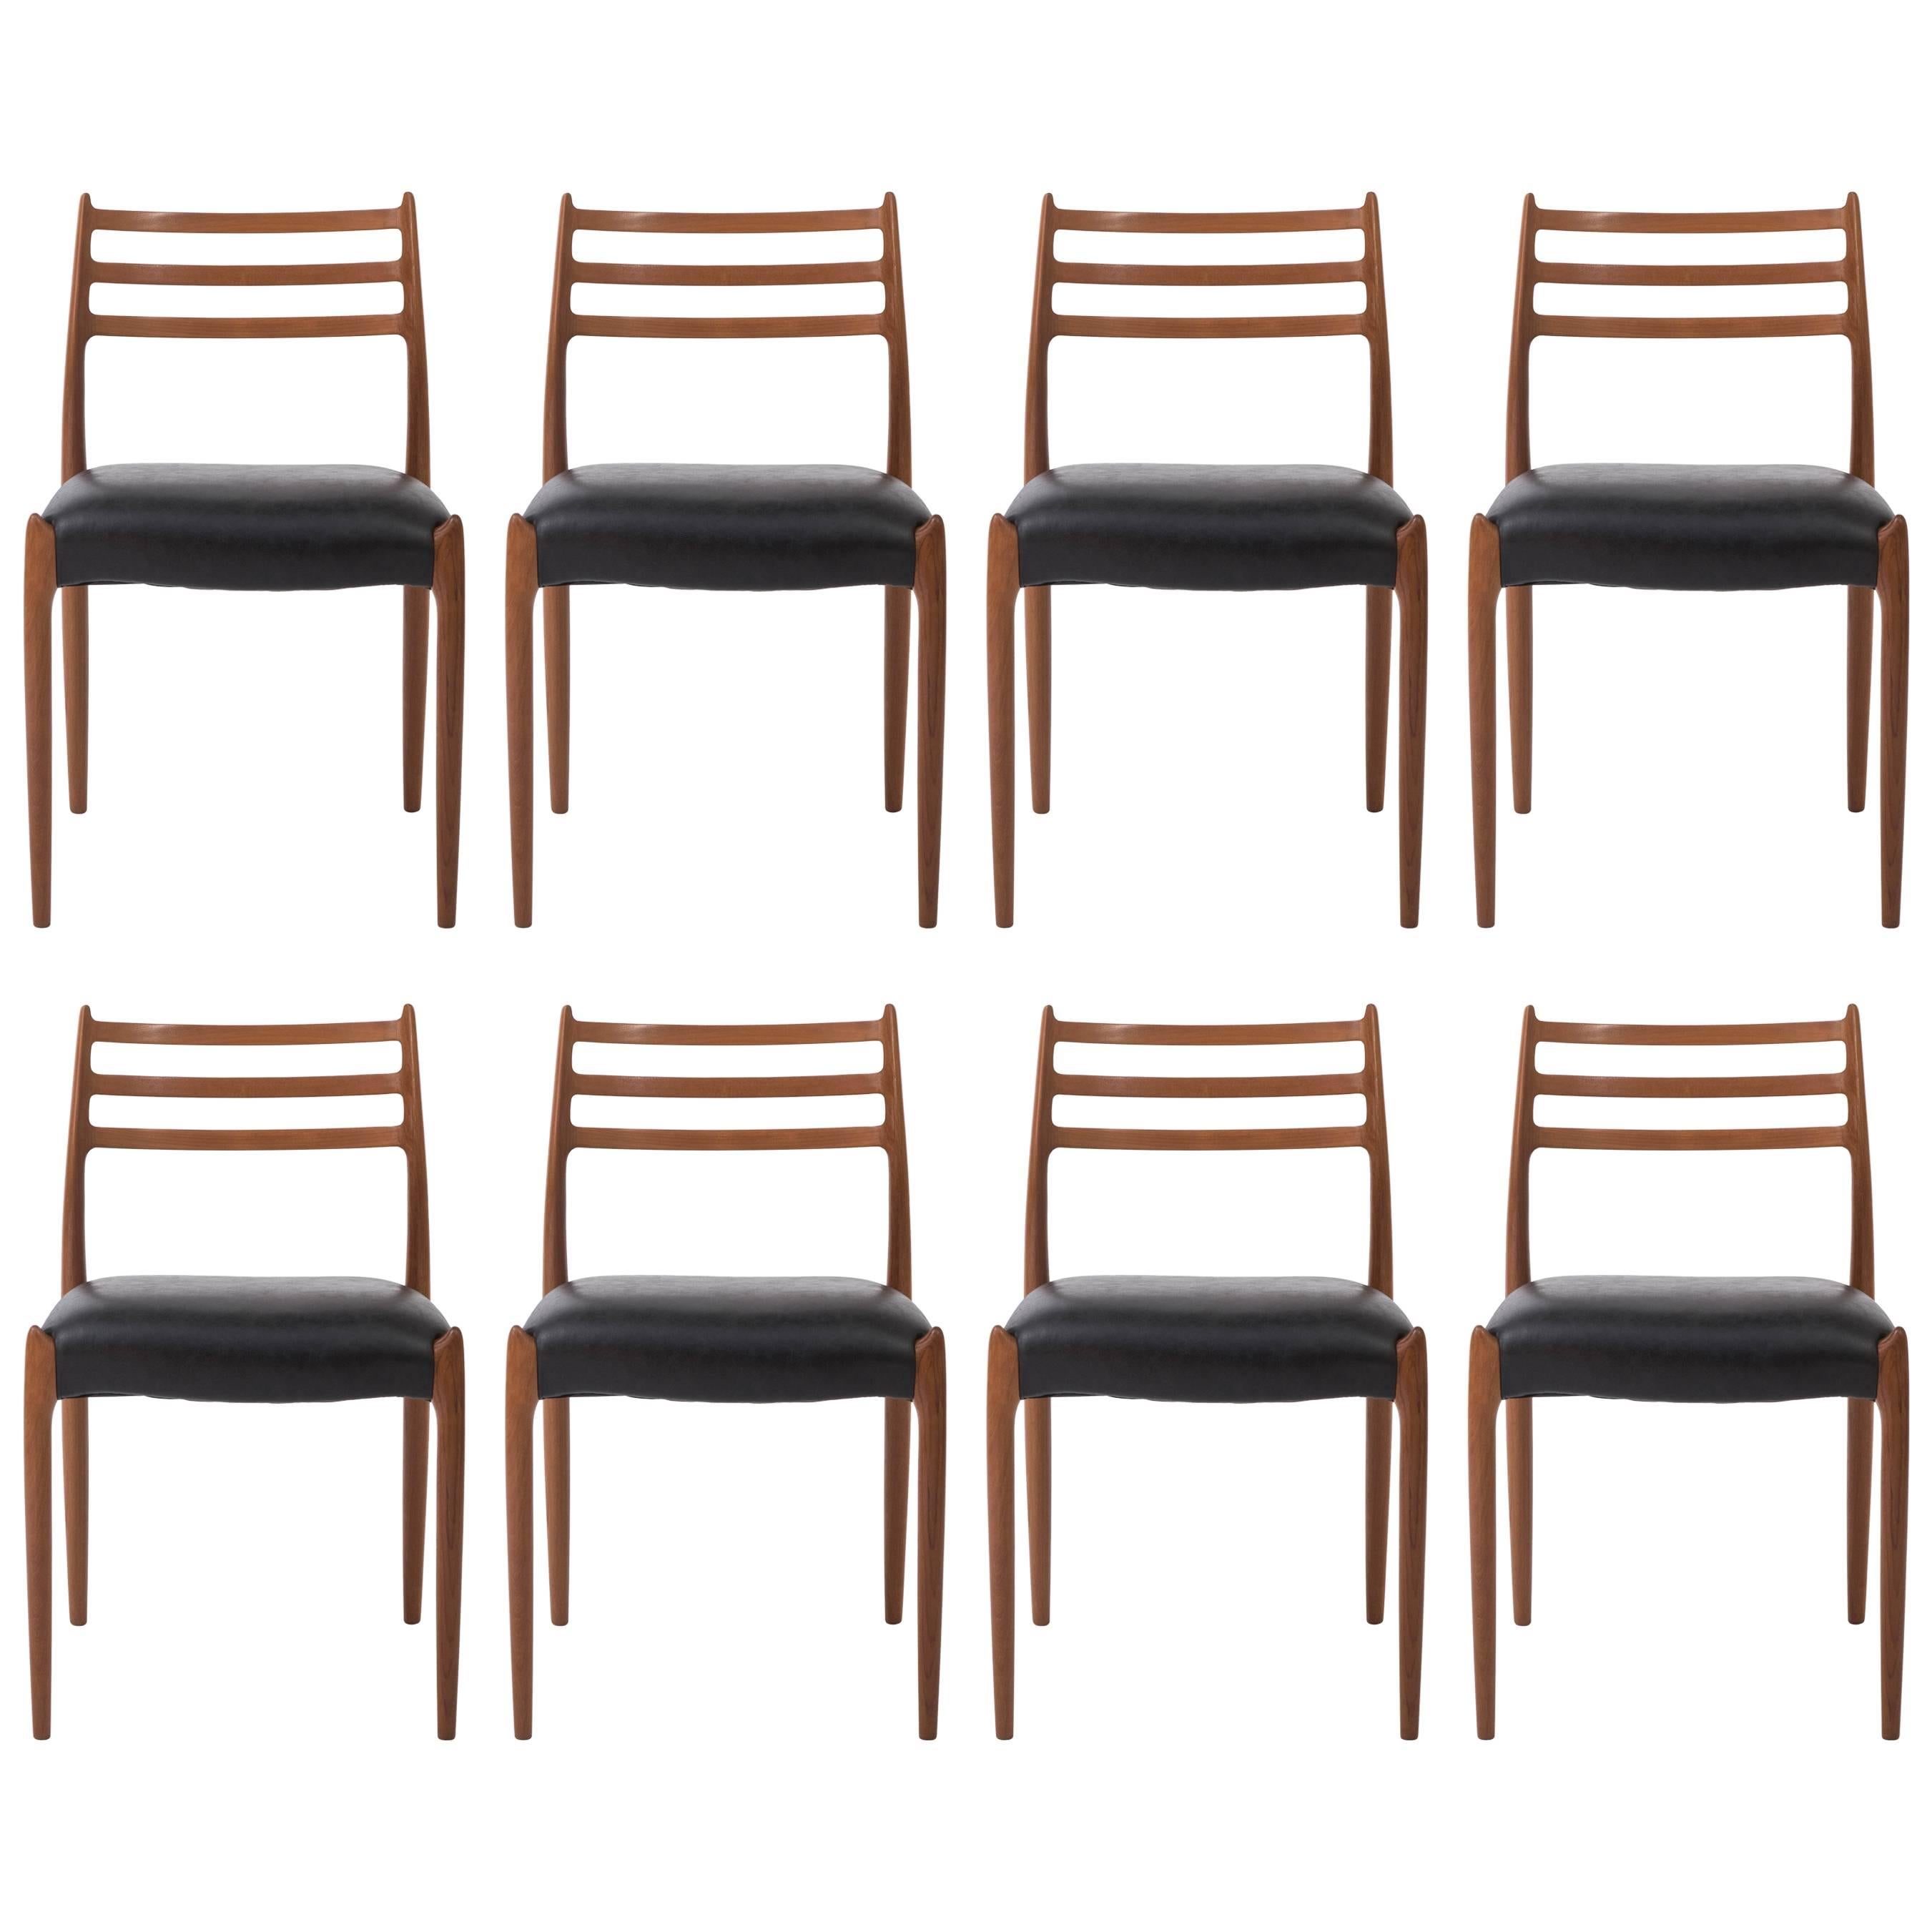 Niels Møller set of eight teak dining chairs, Denmark circa 1960